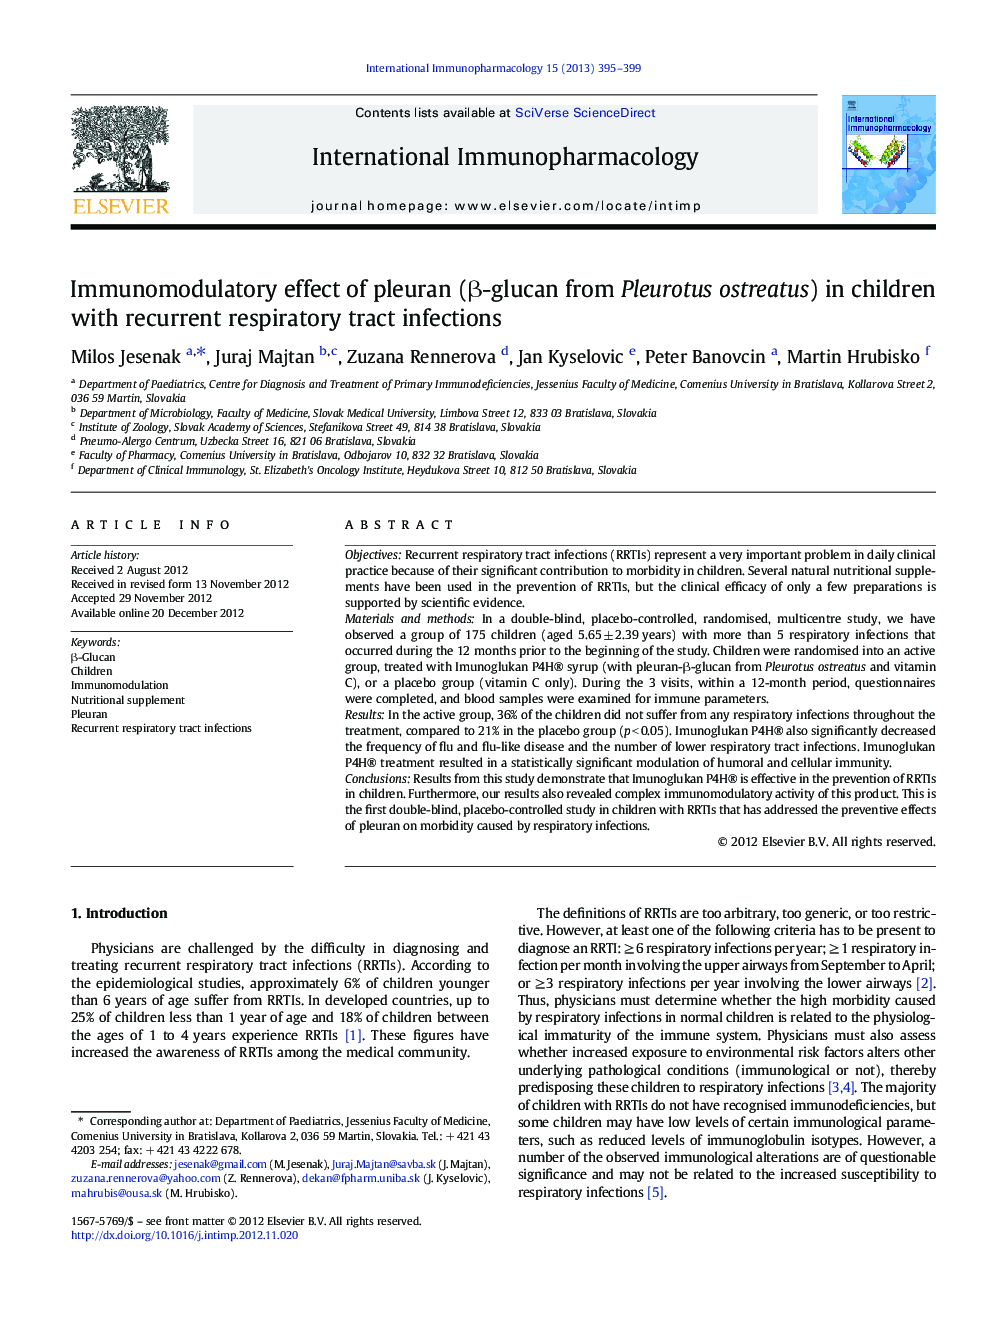 Immunomodulatory effect of pleuran (Î²-glucan from Pleurotus ostreatus) in children with recurrent respiratory tract infections